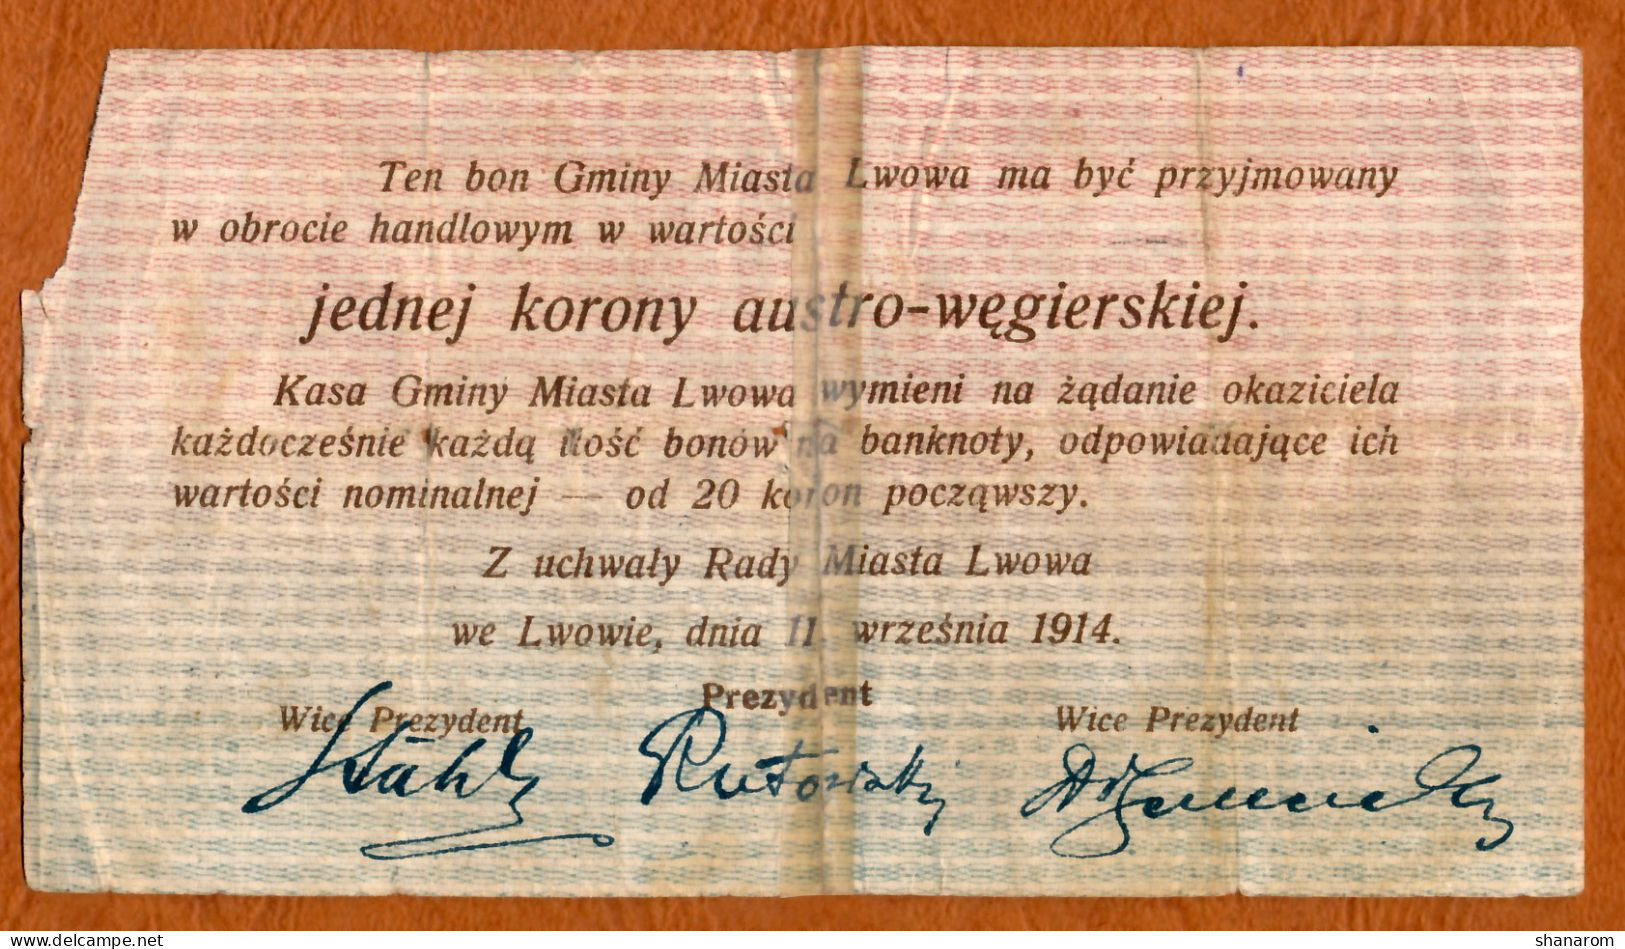 1914 // POLOGNE // JEDNA KORONA - Polonia